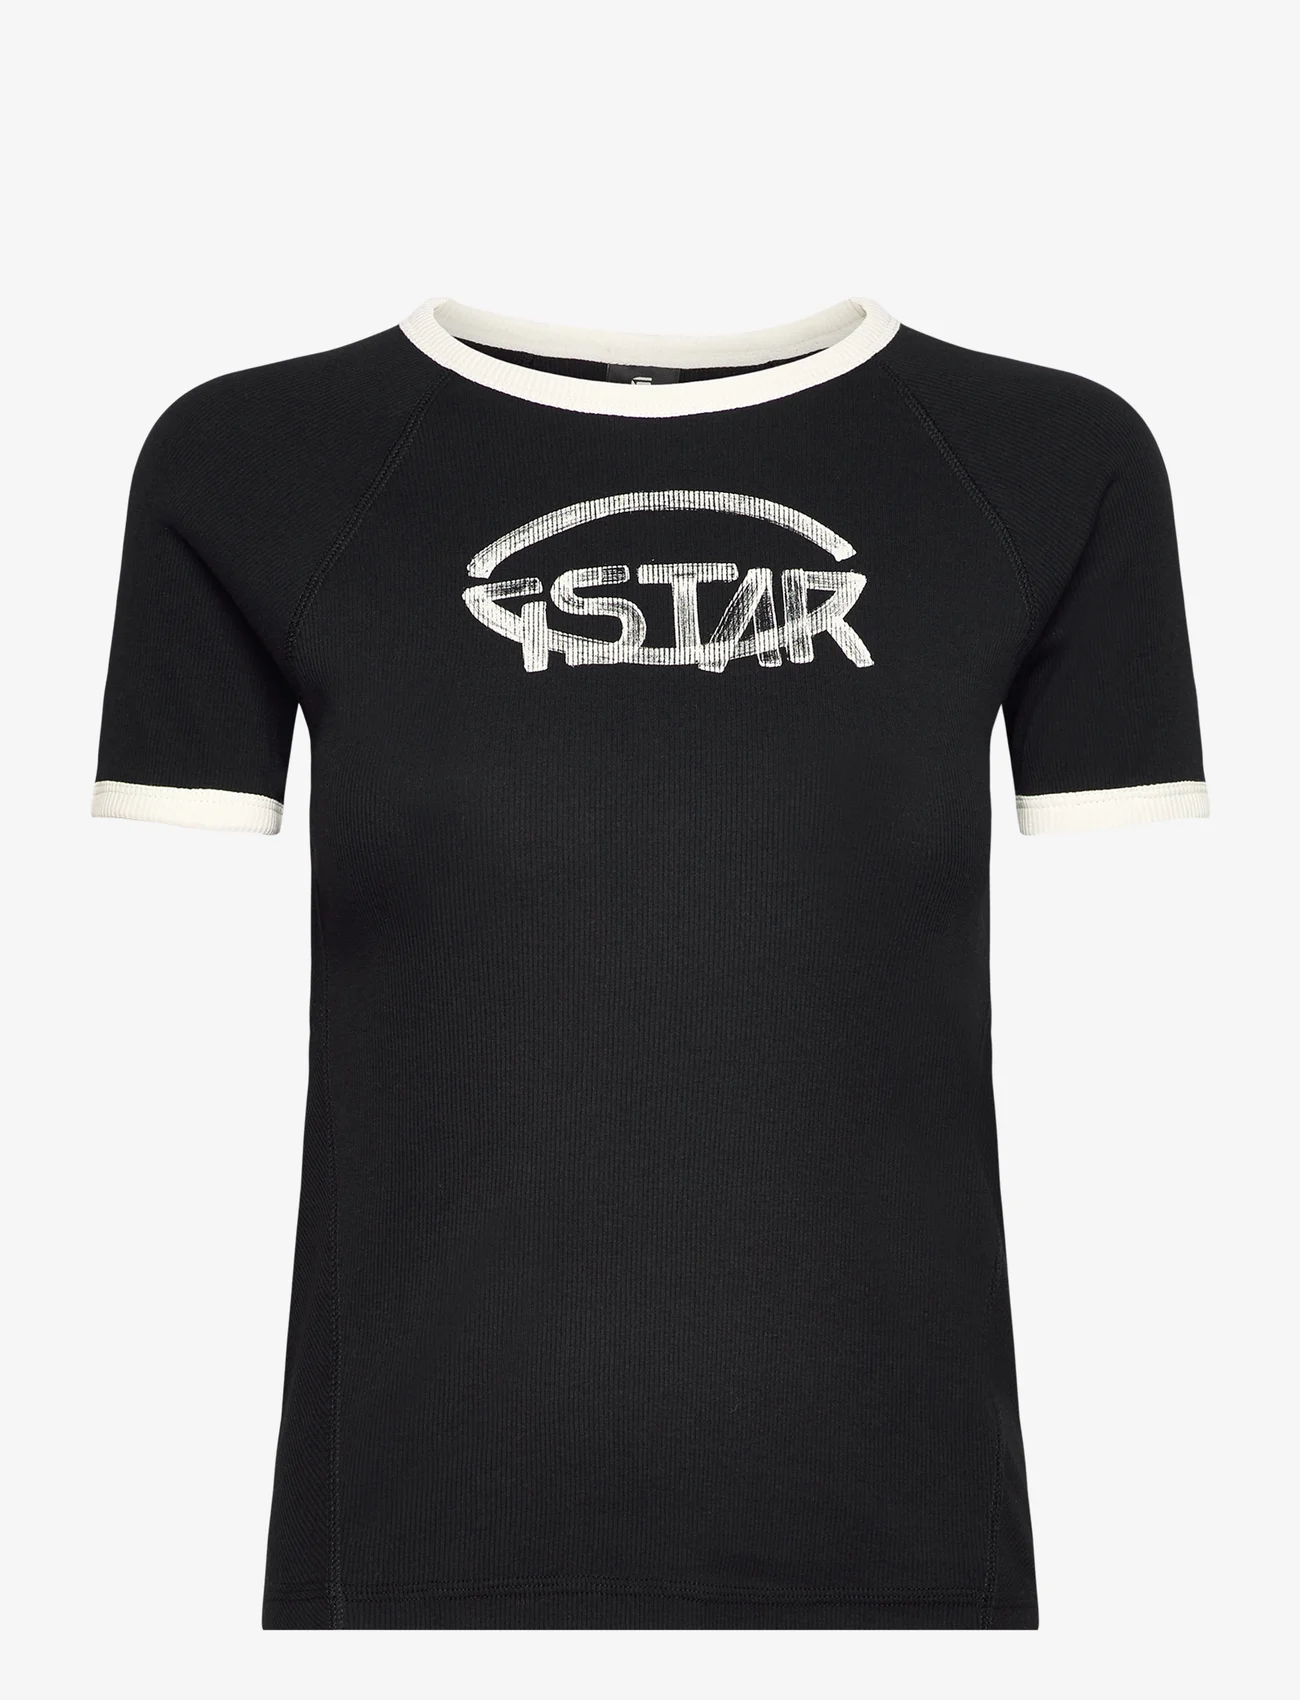 G-Star RAW - Army ringer slim r t wmn - t-skjorter - dk black - 0